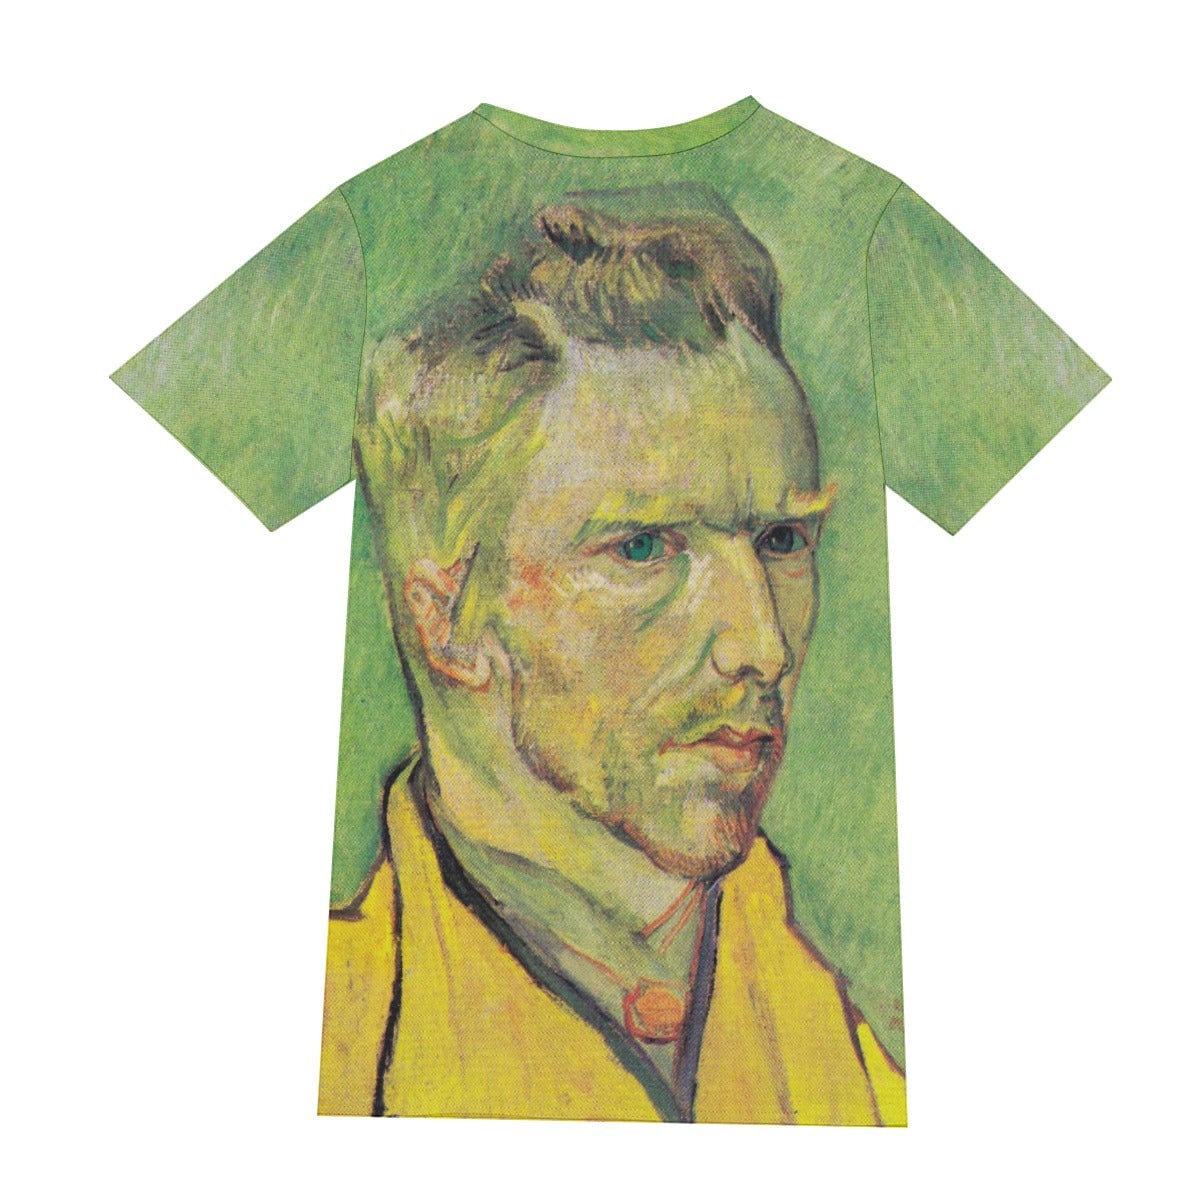 Vincent van Gogh’s Self-Portrait on Green T-Shirt